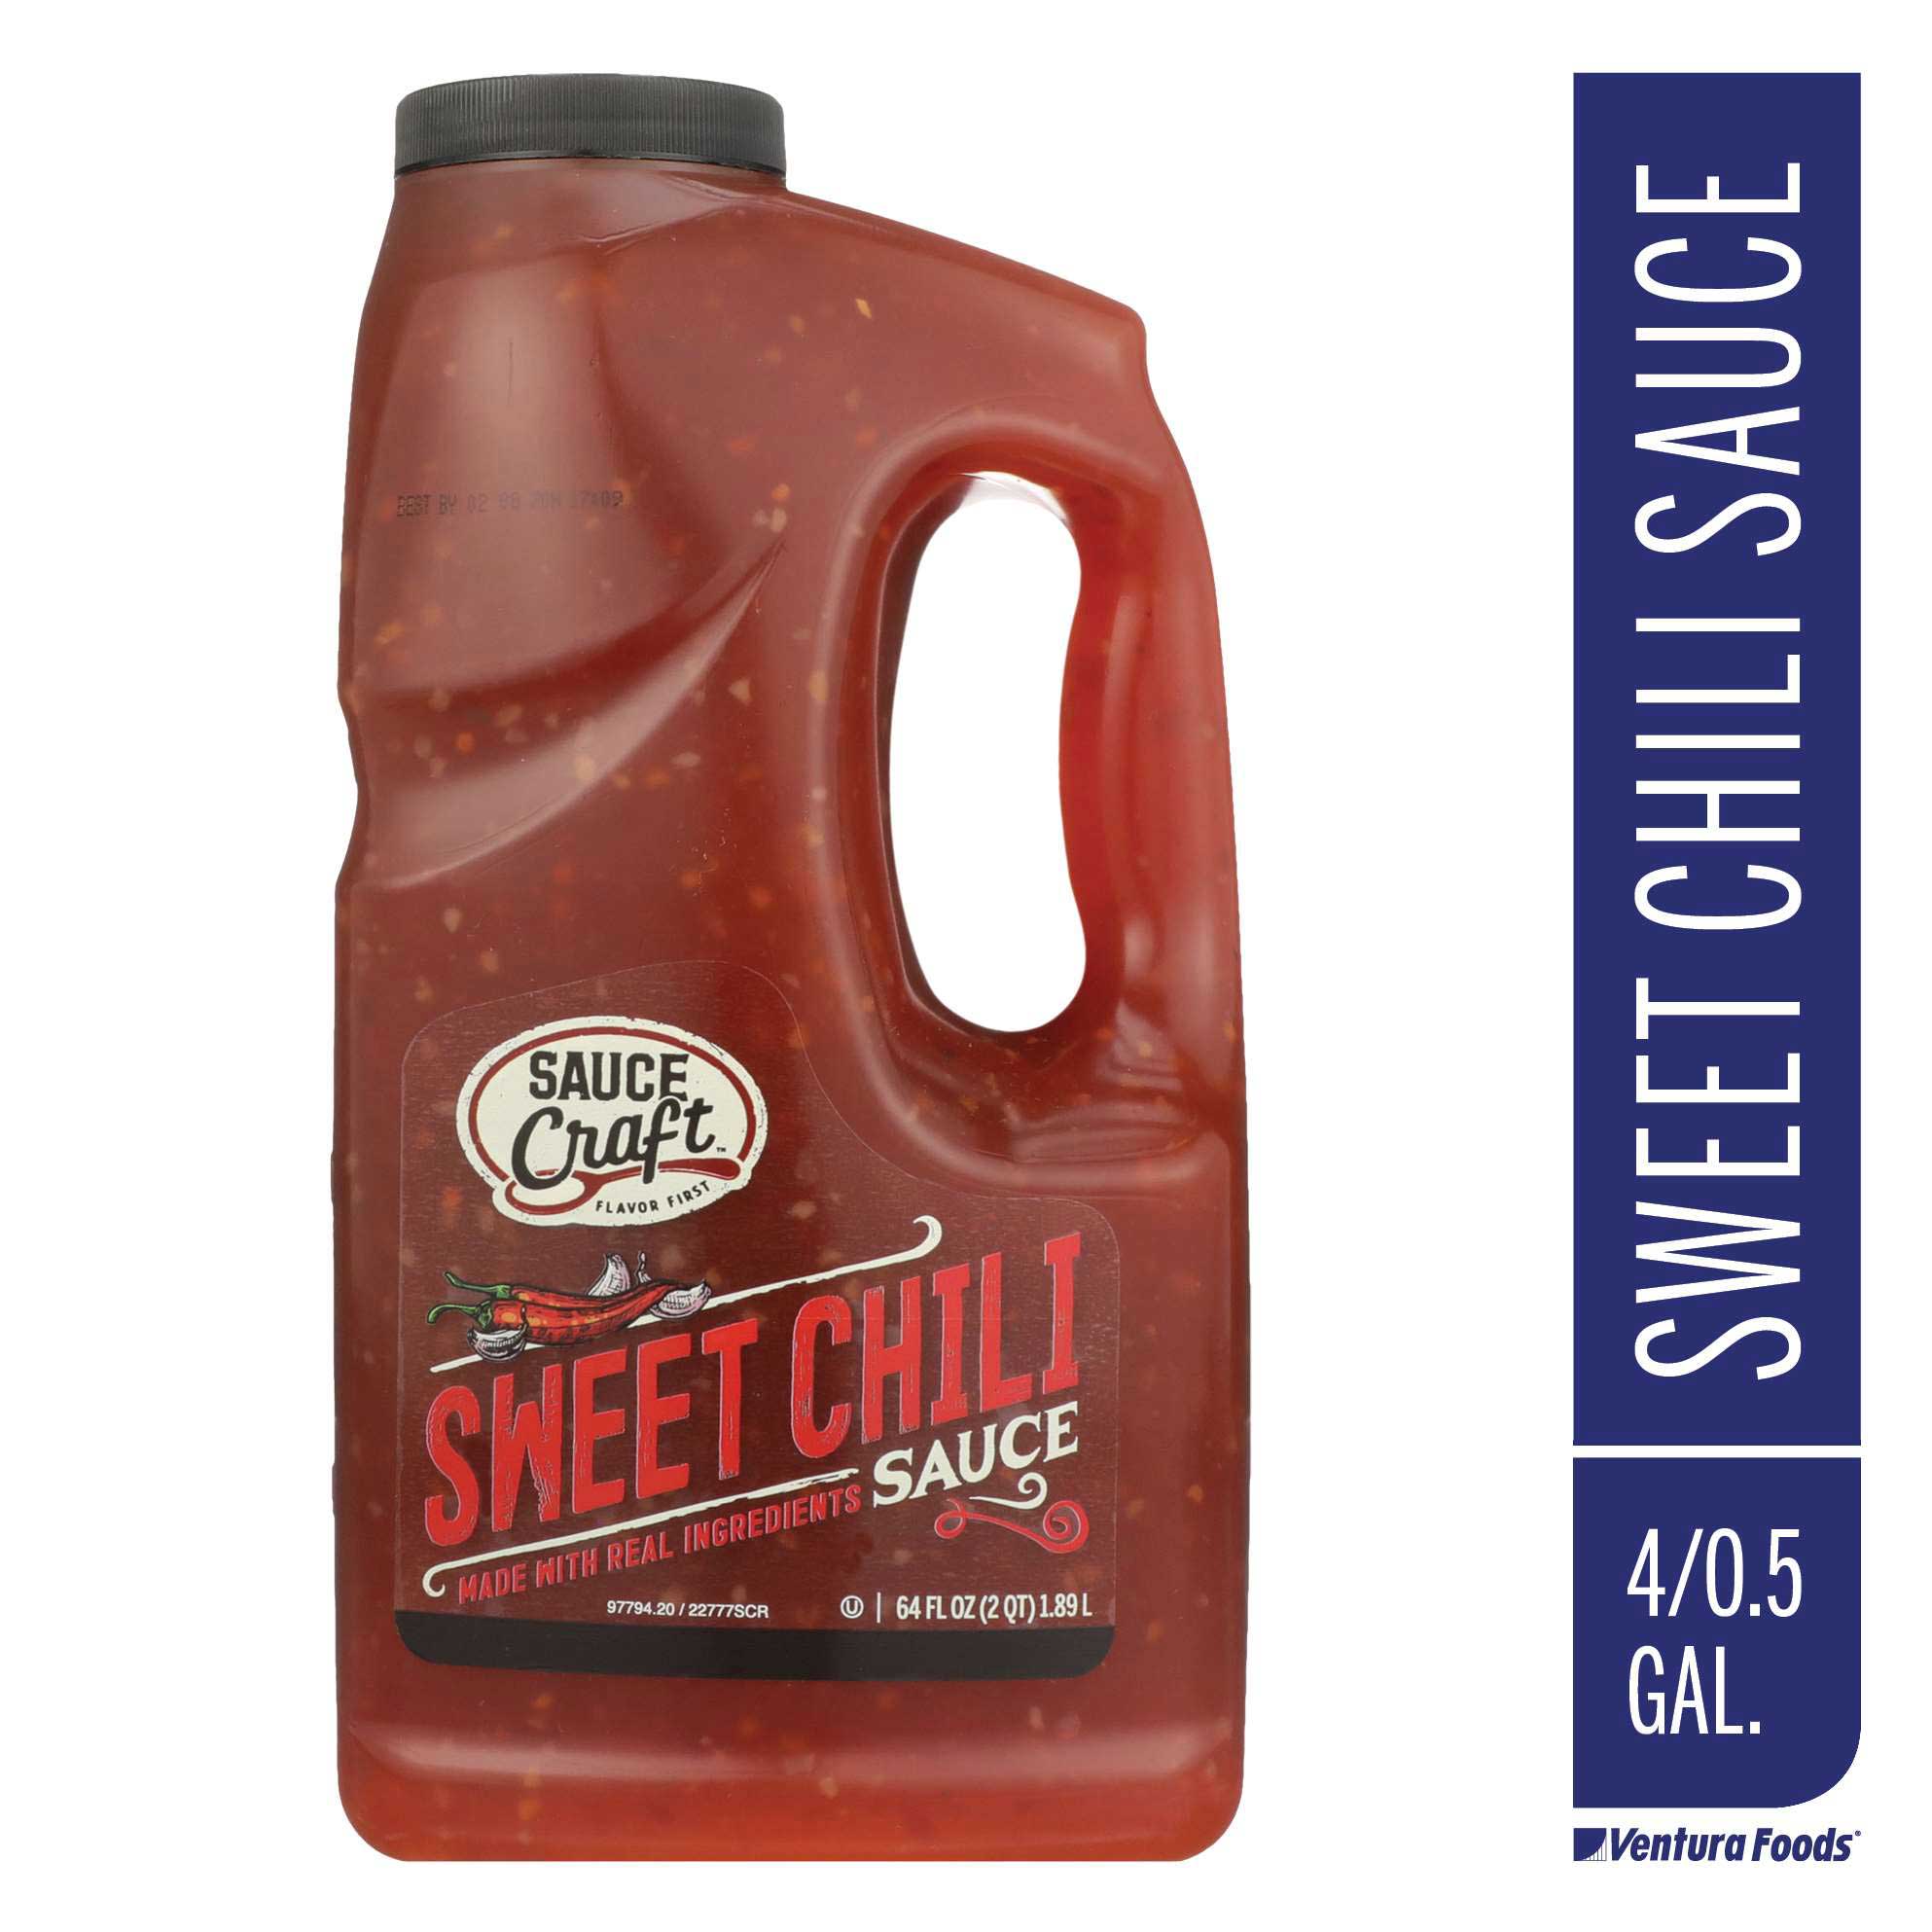 Sauce Craft Sweet Chili Sauce, 0.5 Gallon -- 4 per case.